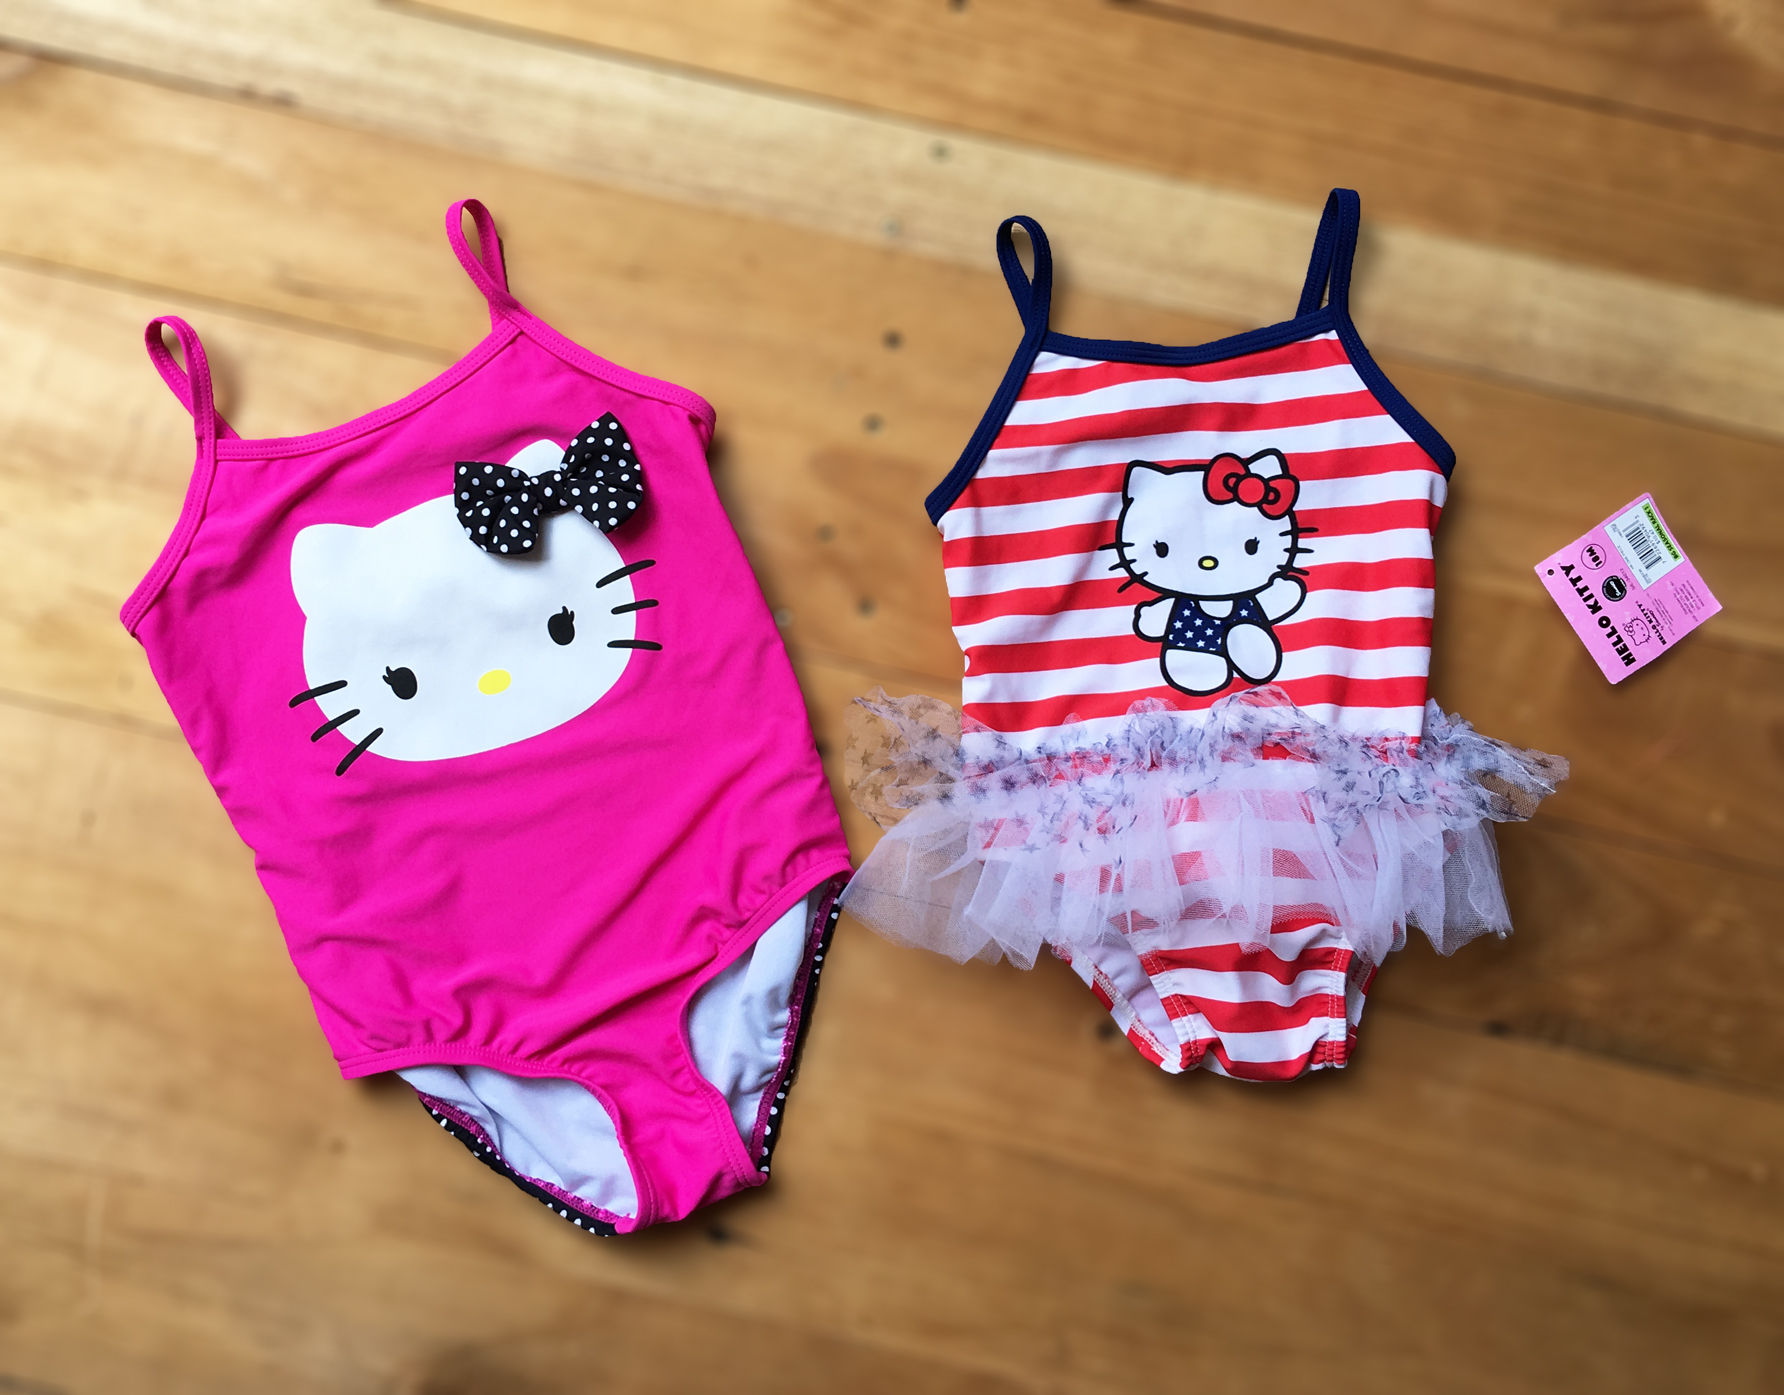 Áo bơi bé gái, Hello Kitty hiệu George, xuất xịn, made in cambodia.